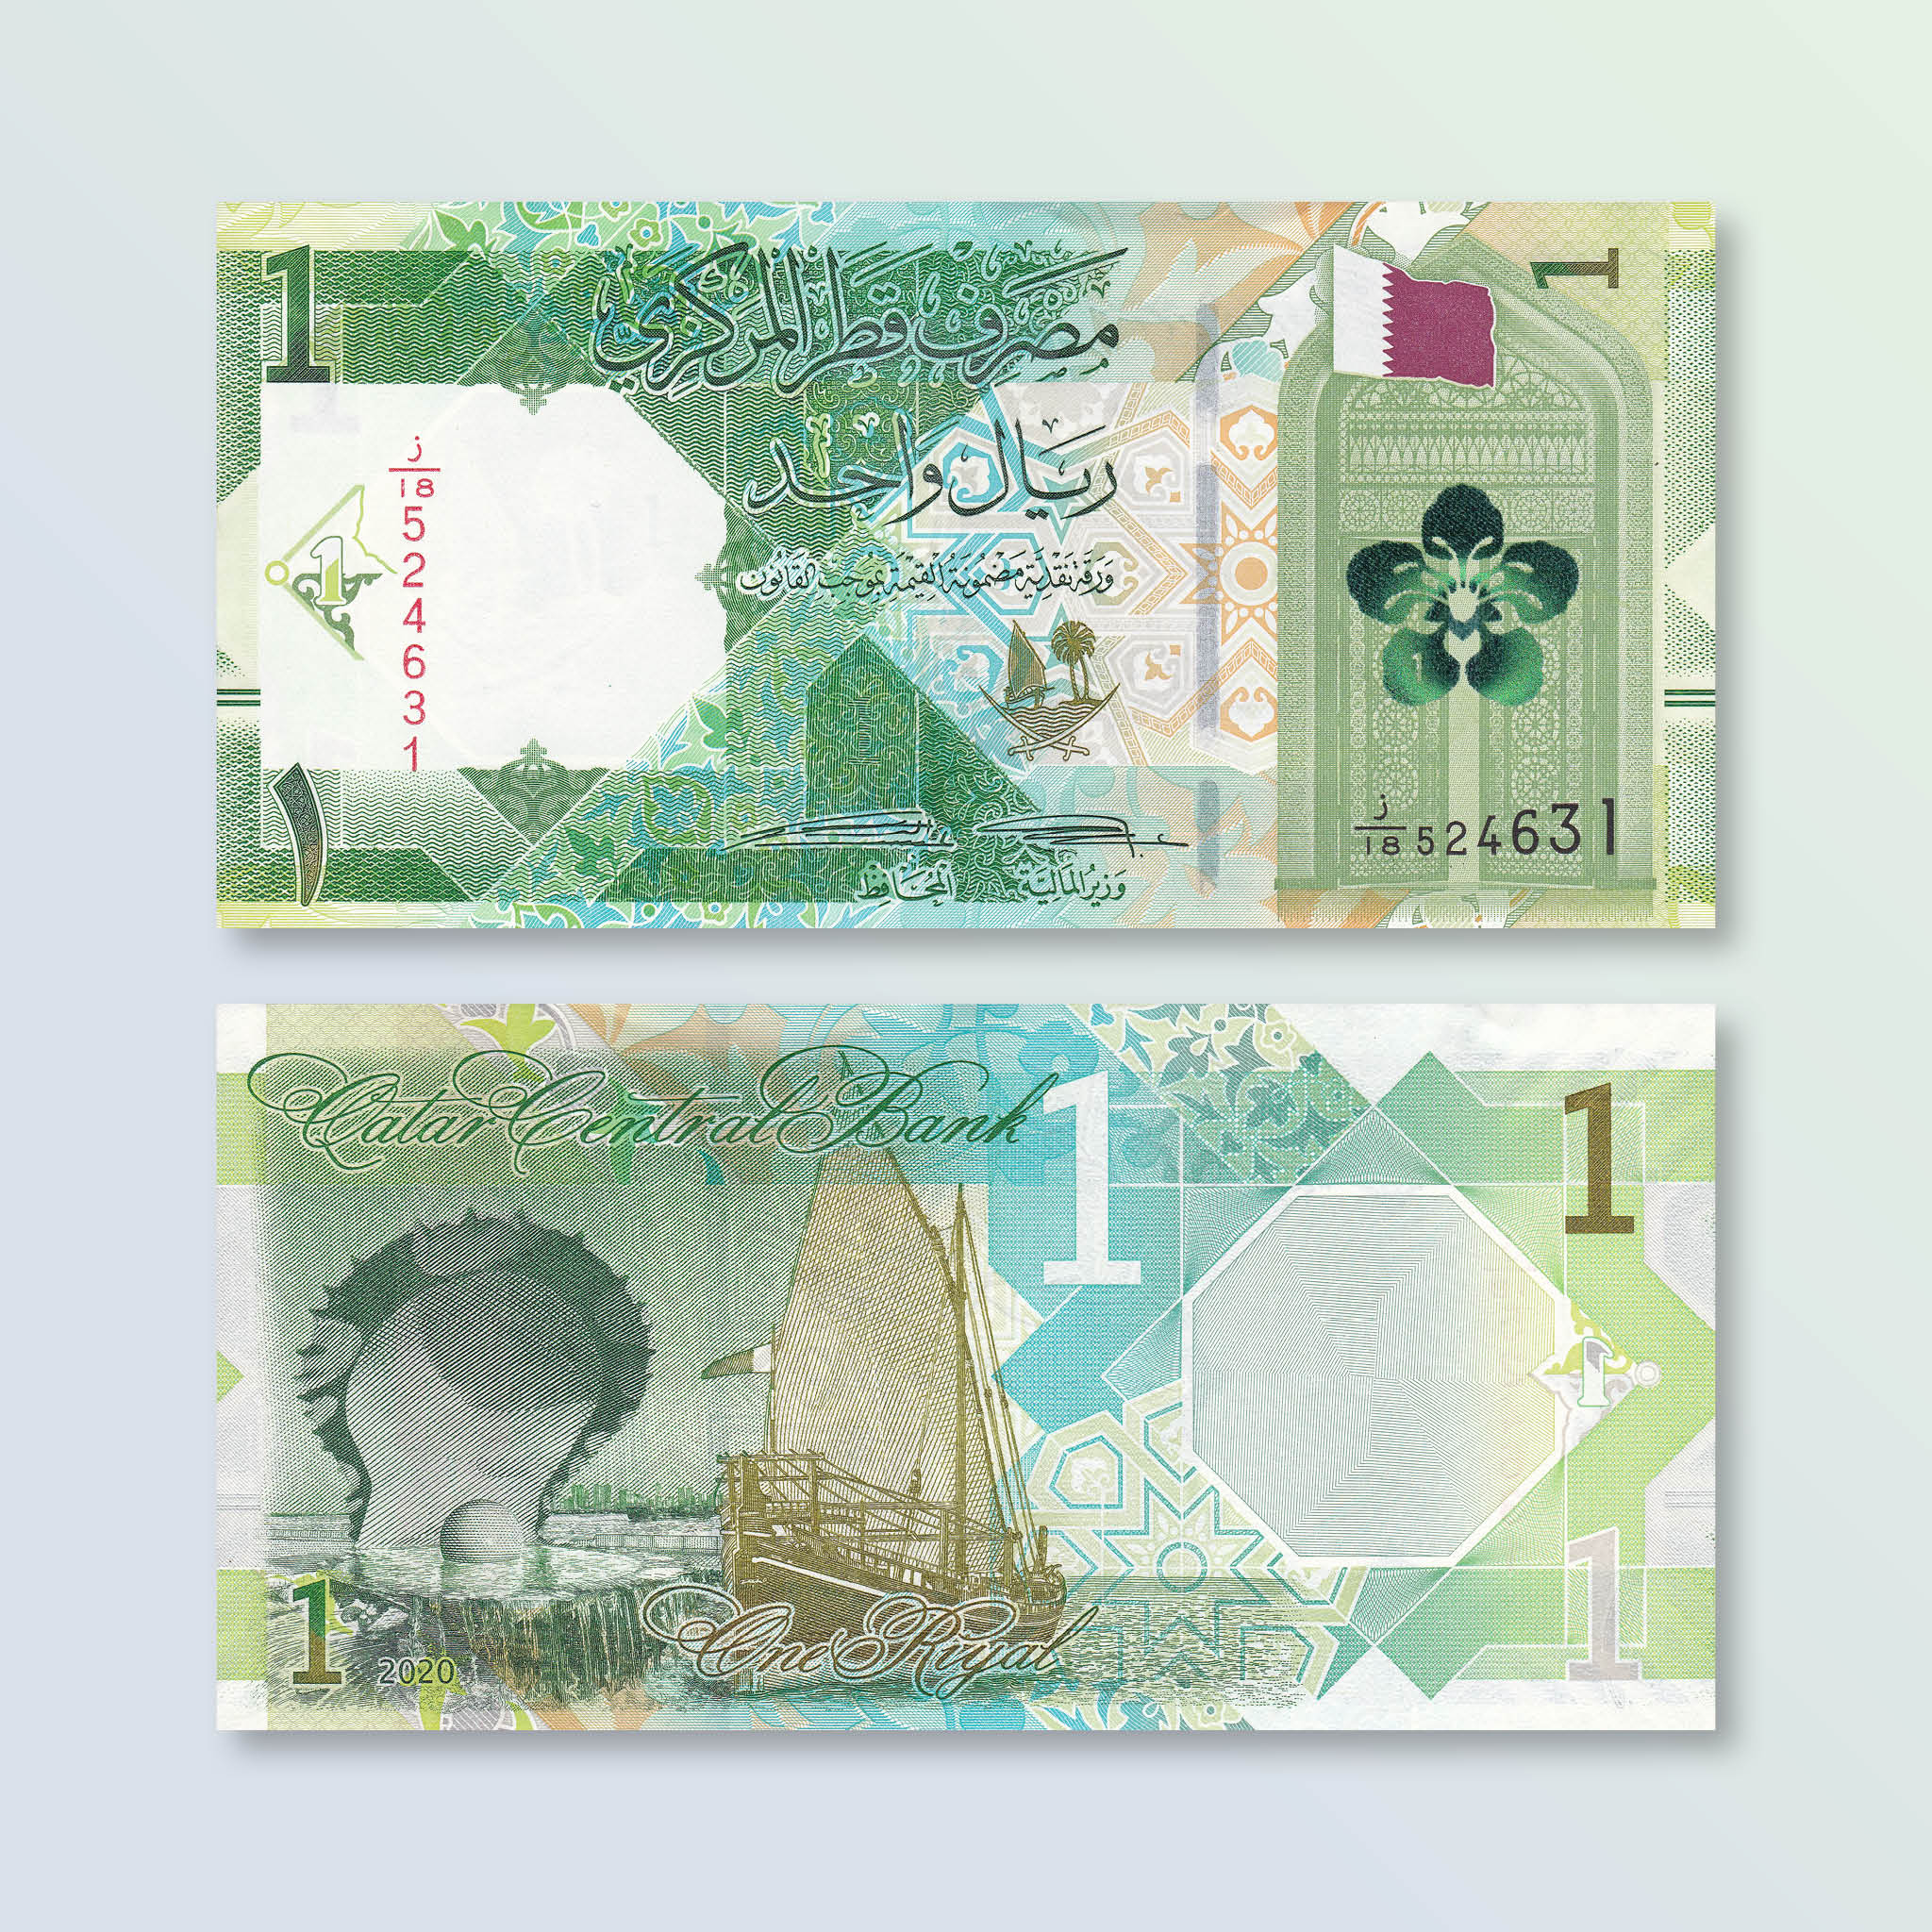 Qatar 1 Riyal, 2020, B219a, UNC - Robert's World Money - World Banknotes